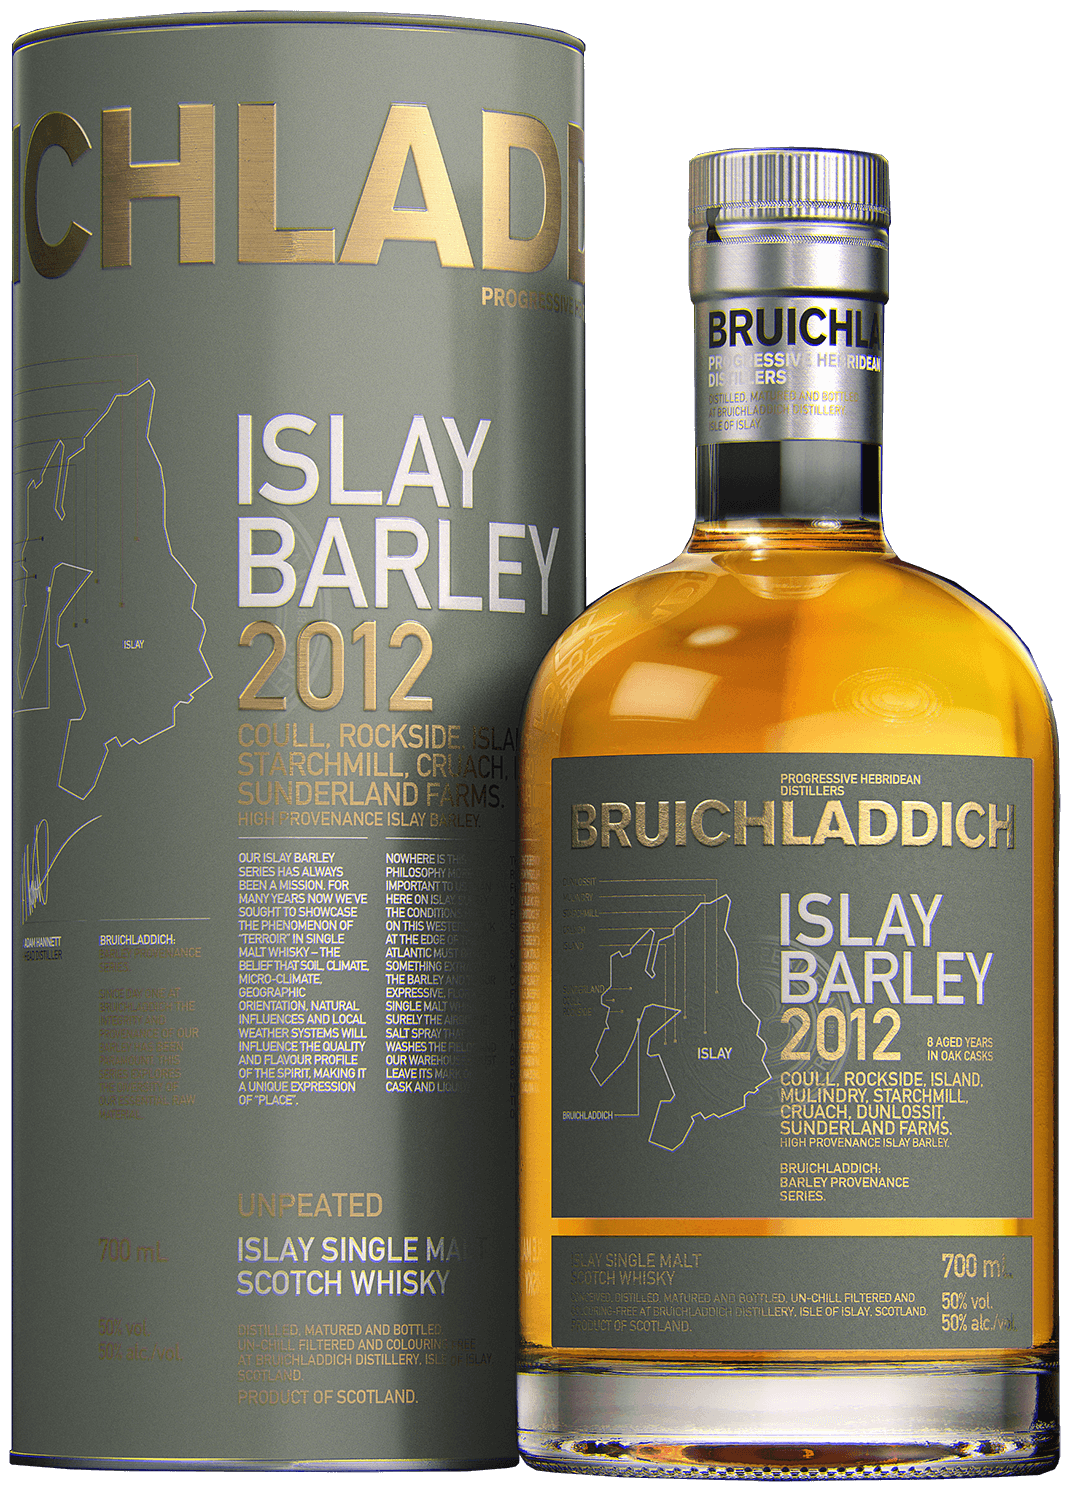 Bruichladdich Islay Barley single malt scotch whisky (gift box) bunnahabhain stiuireadair islay single malt scotch whisky gift box